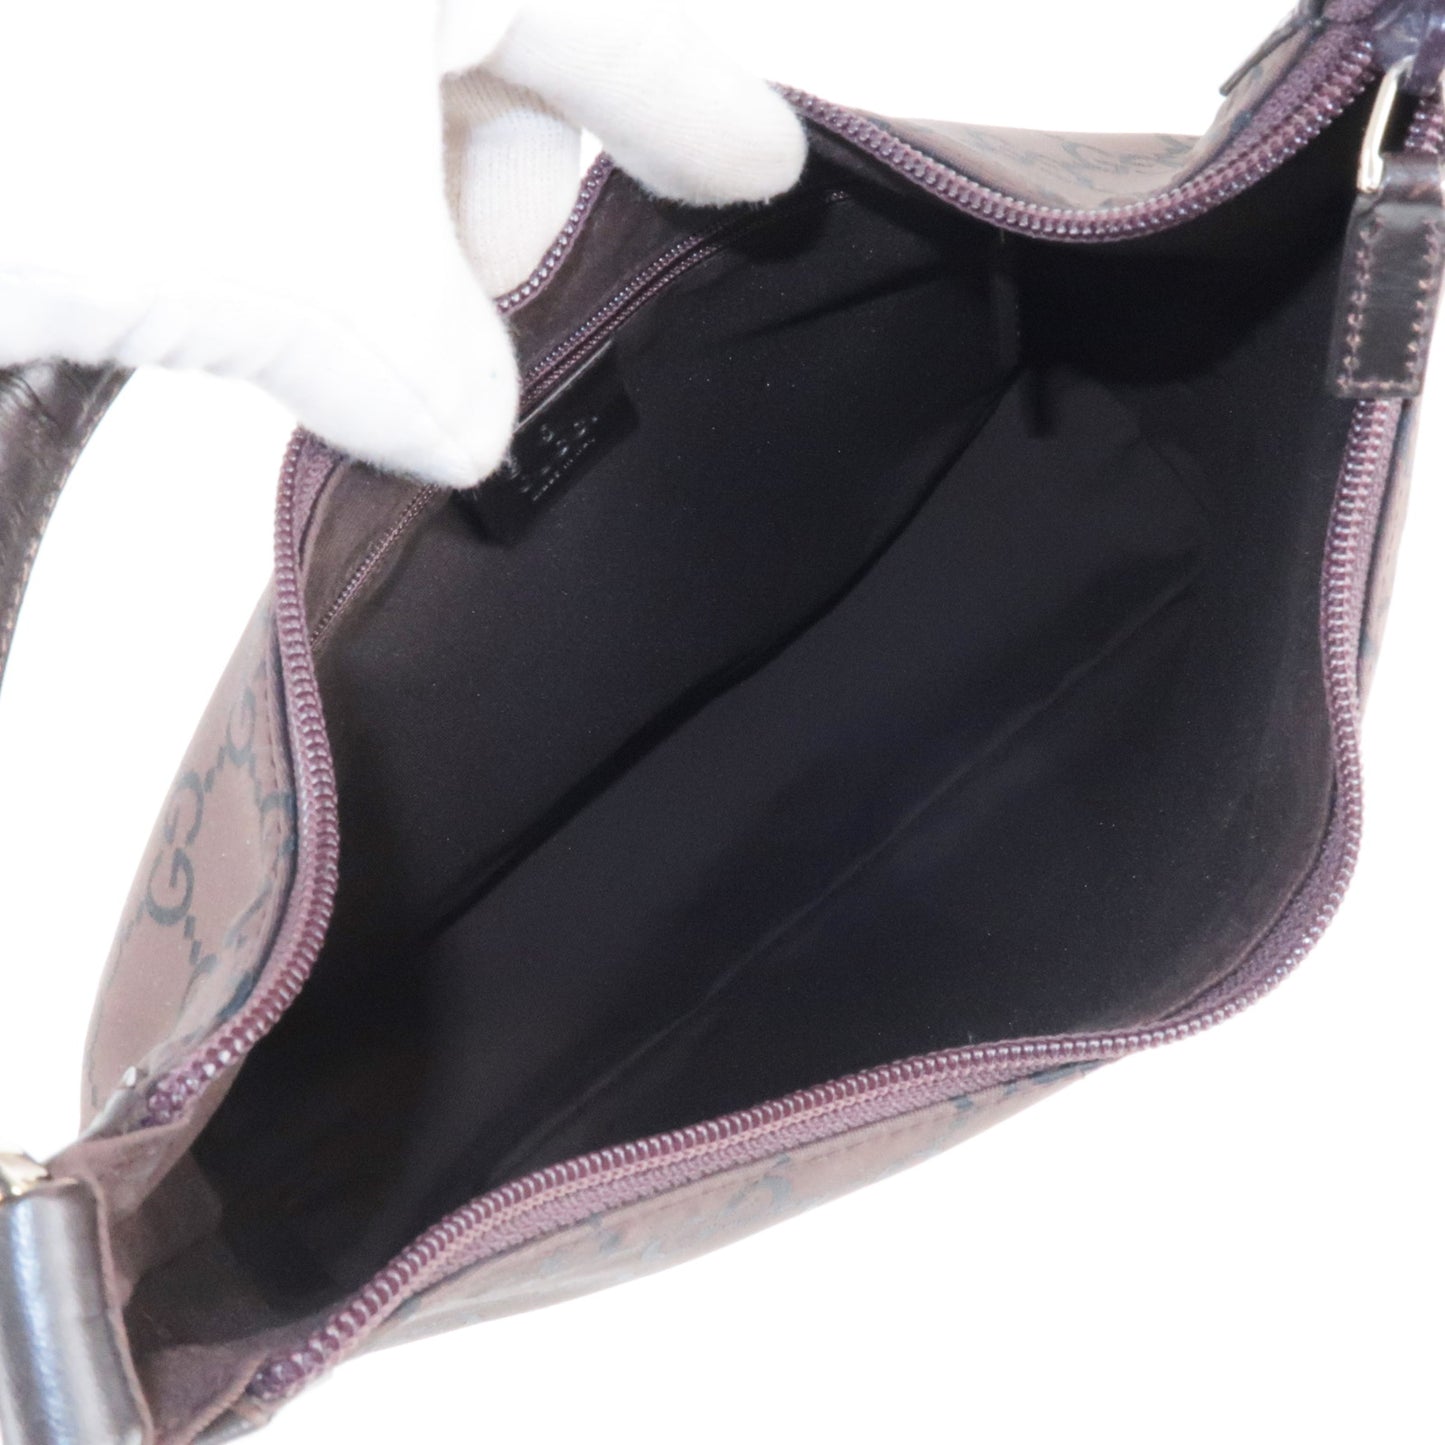 GUCCI GG Nylon Leather Shoulder Bag Purse Brown 179776